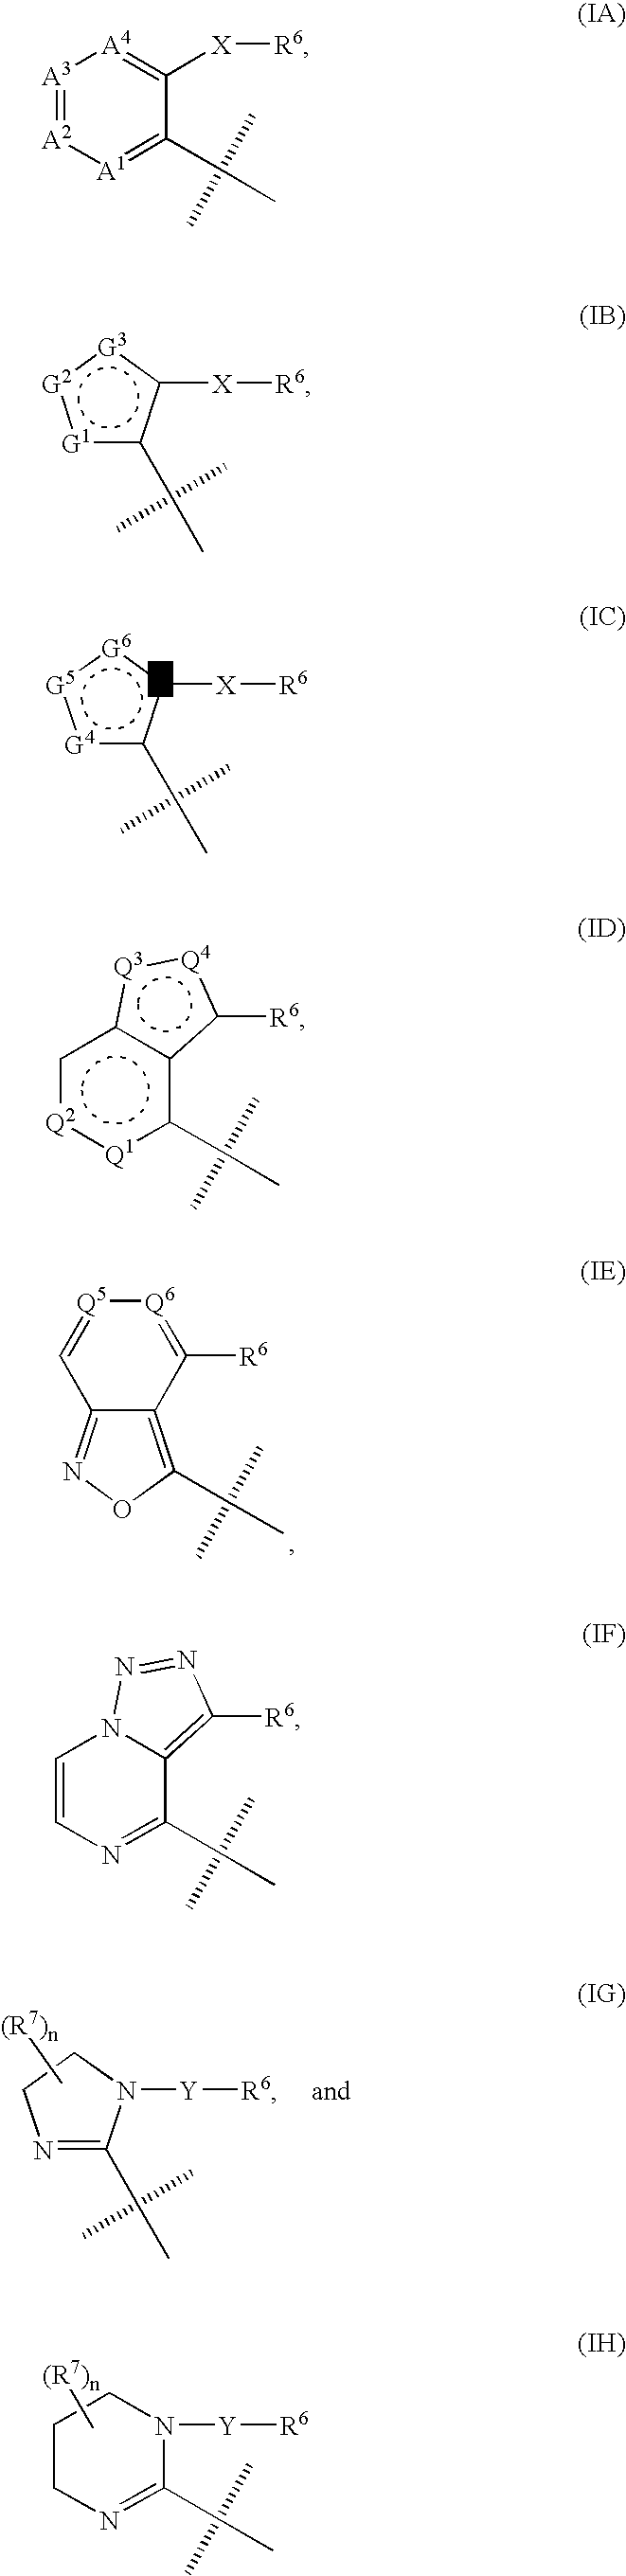 Triazole derivatives as tachykinin receptor antagonists